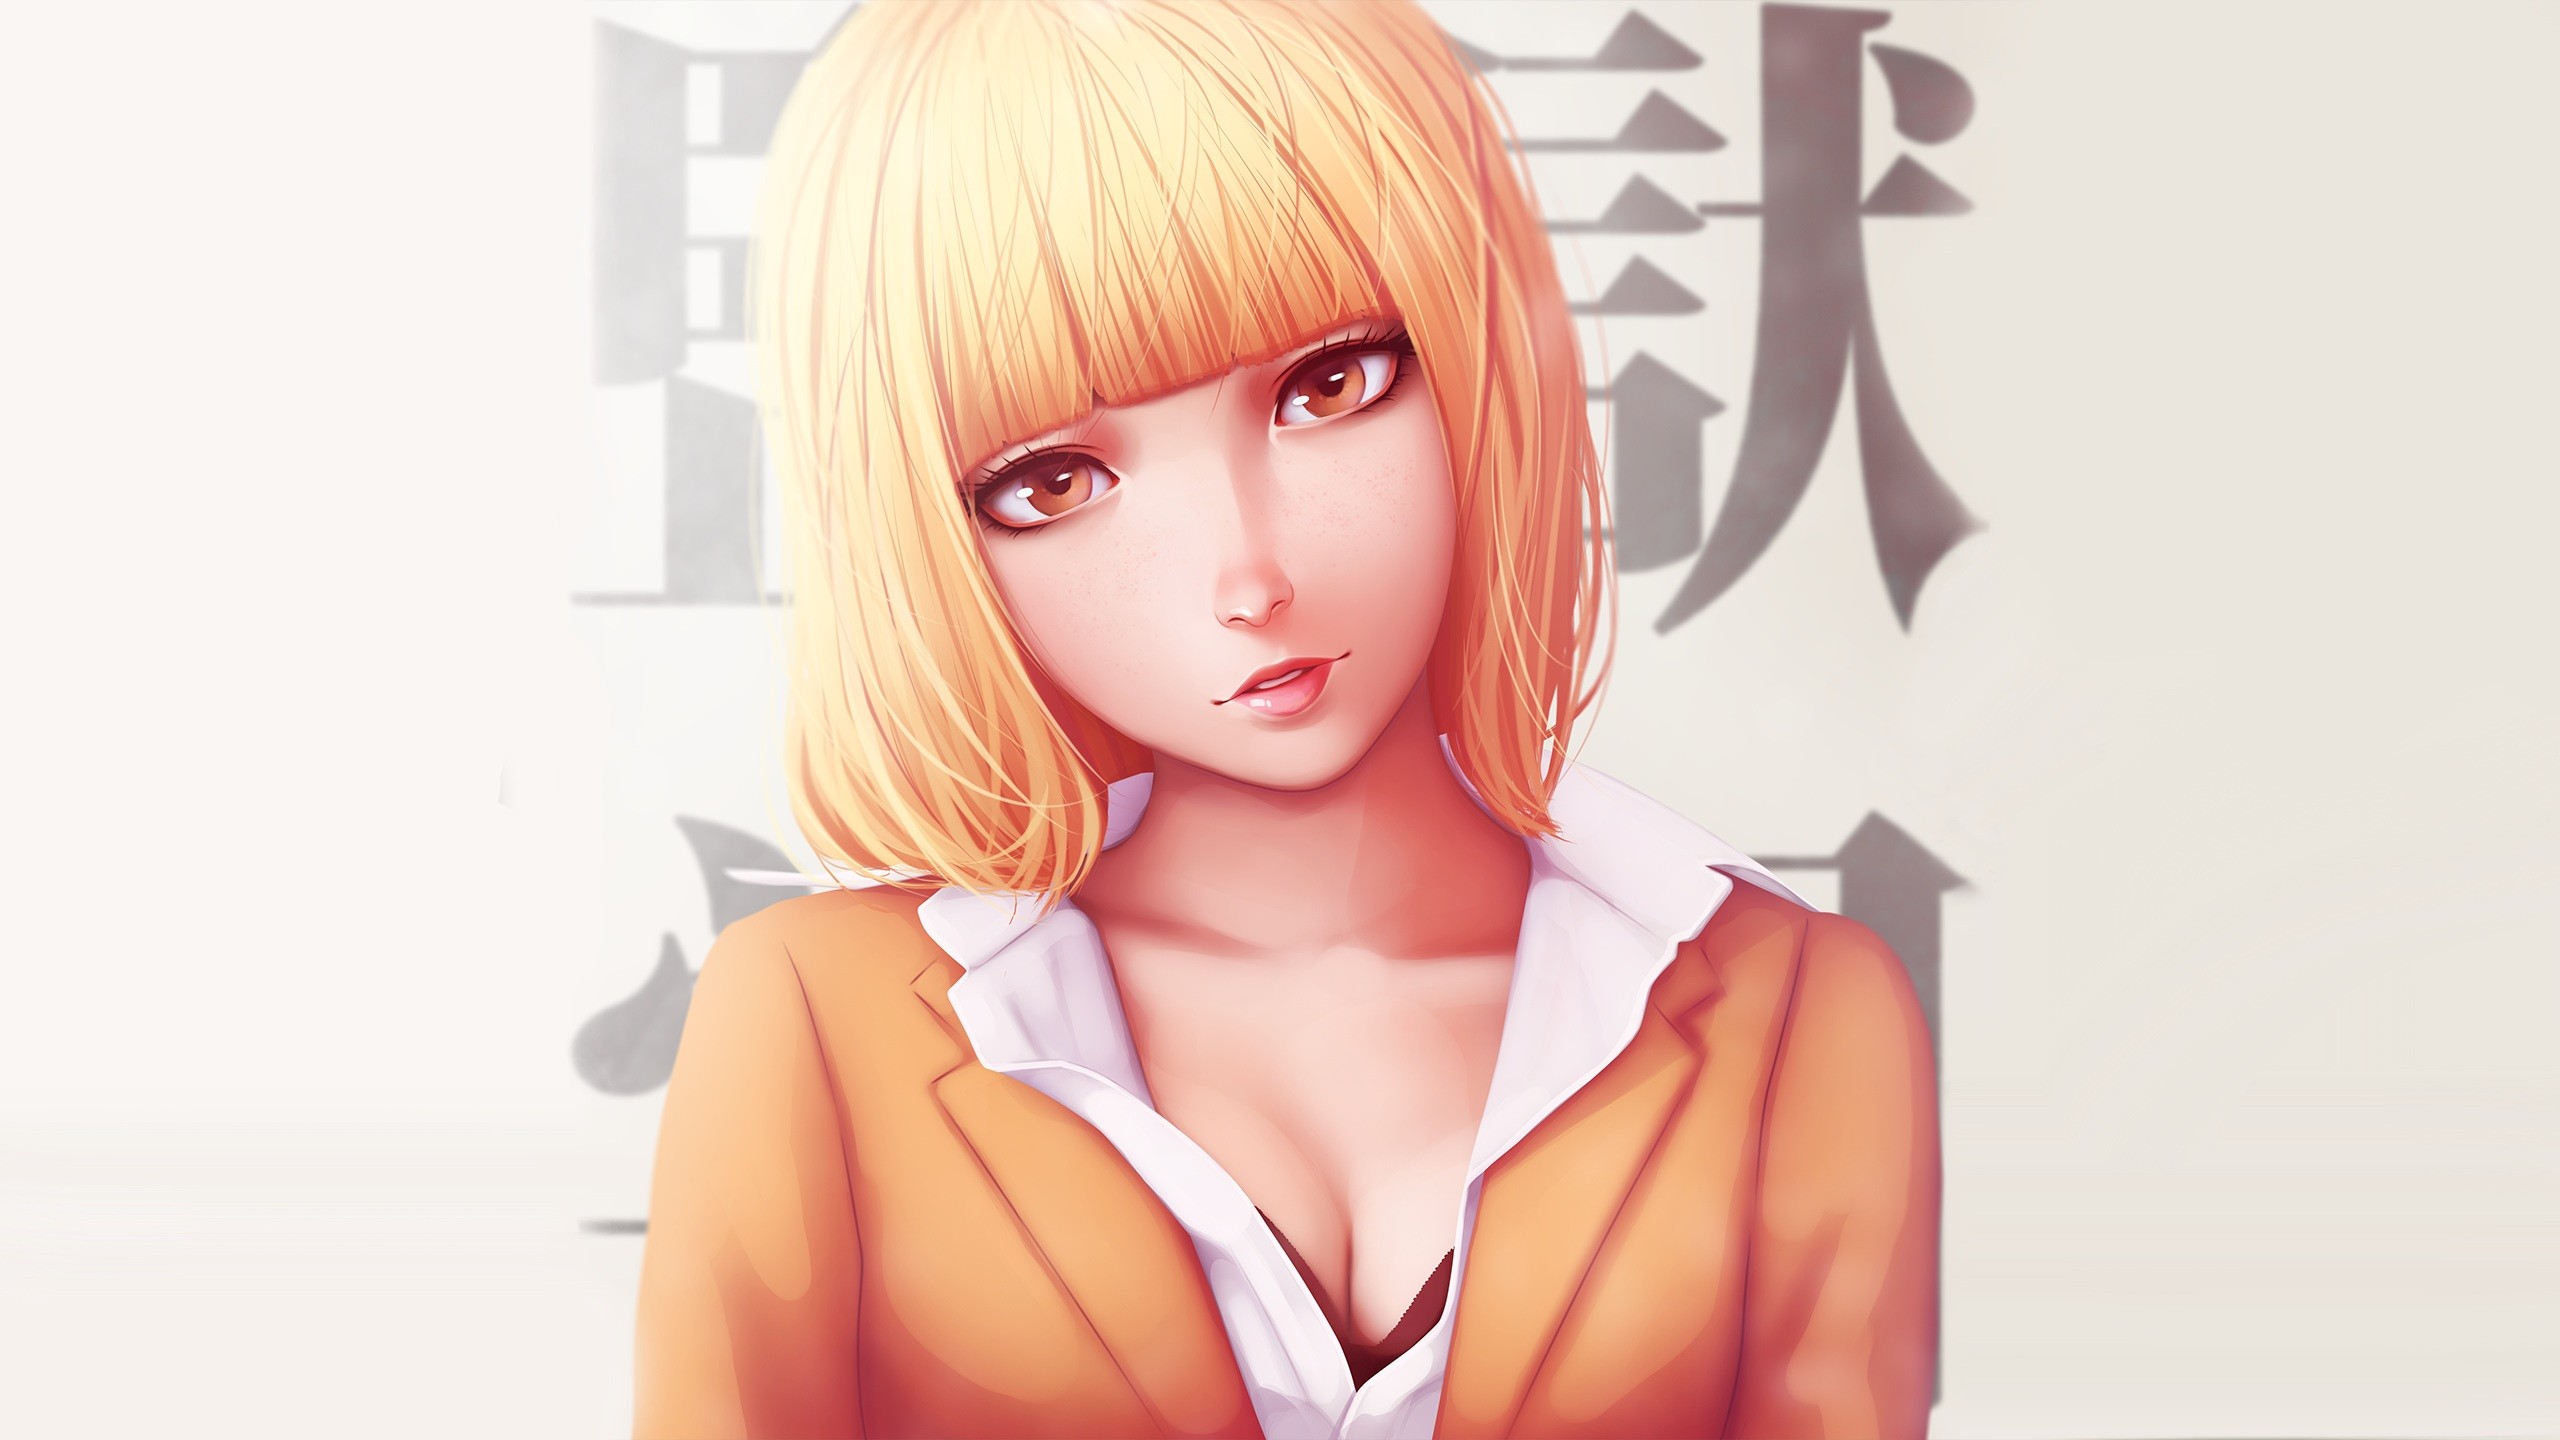 Anime 2560x1440 anime anime girls Prison School Midorikawa Hana blonde women face Pixiv closeup portrait looking at viewer shoulder length hair white background